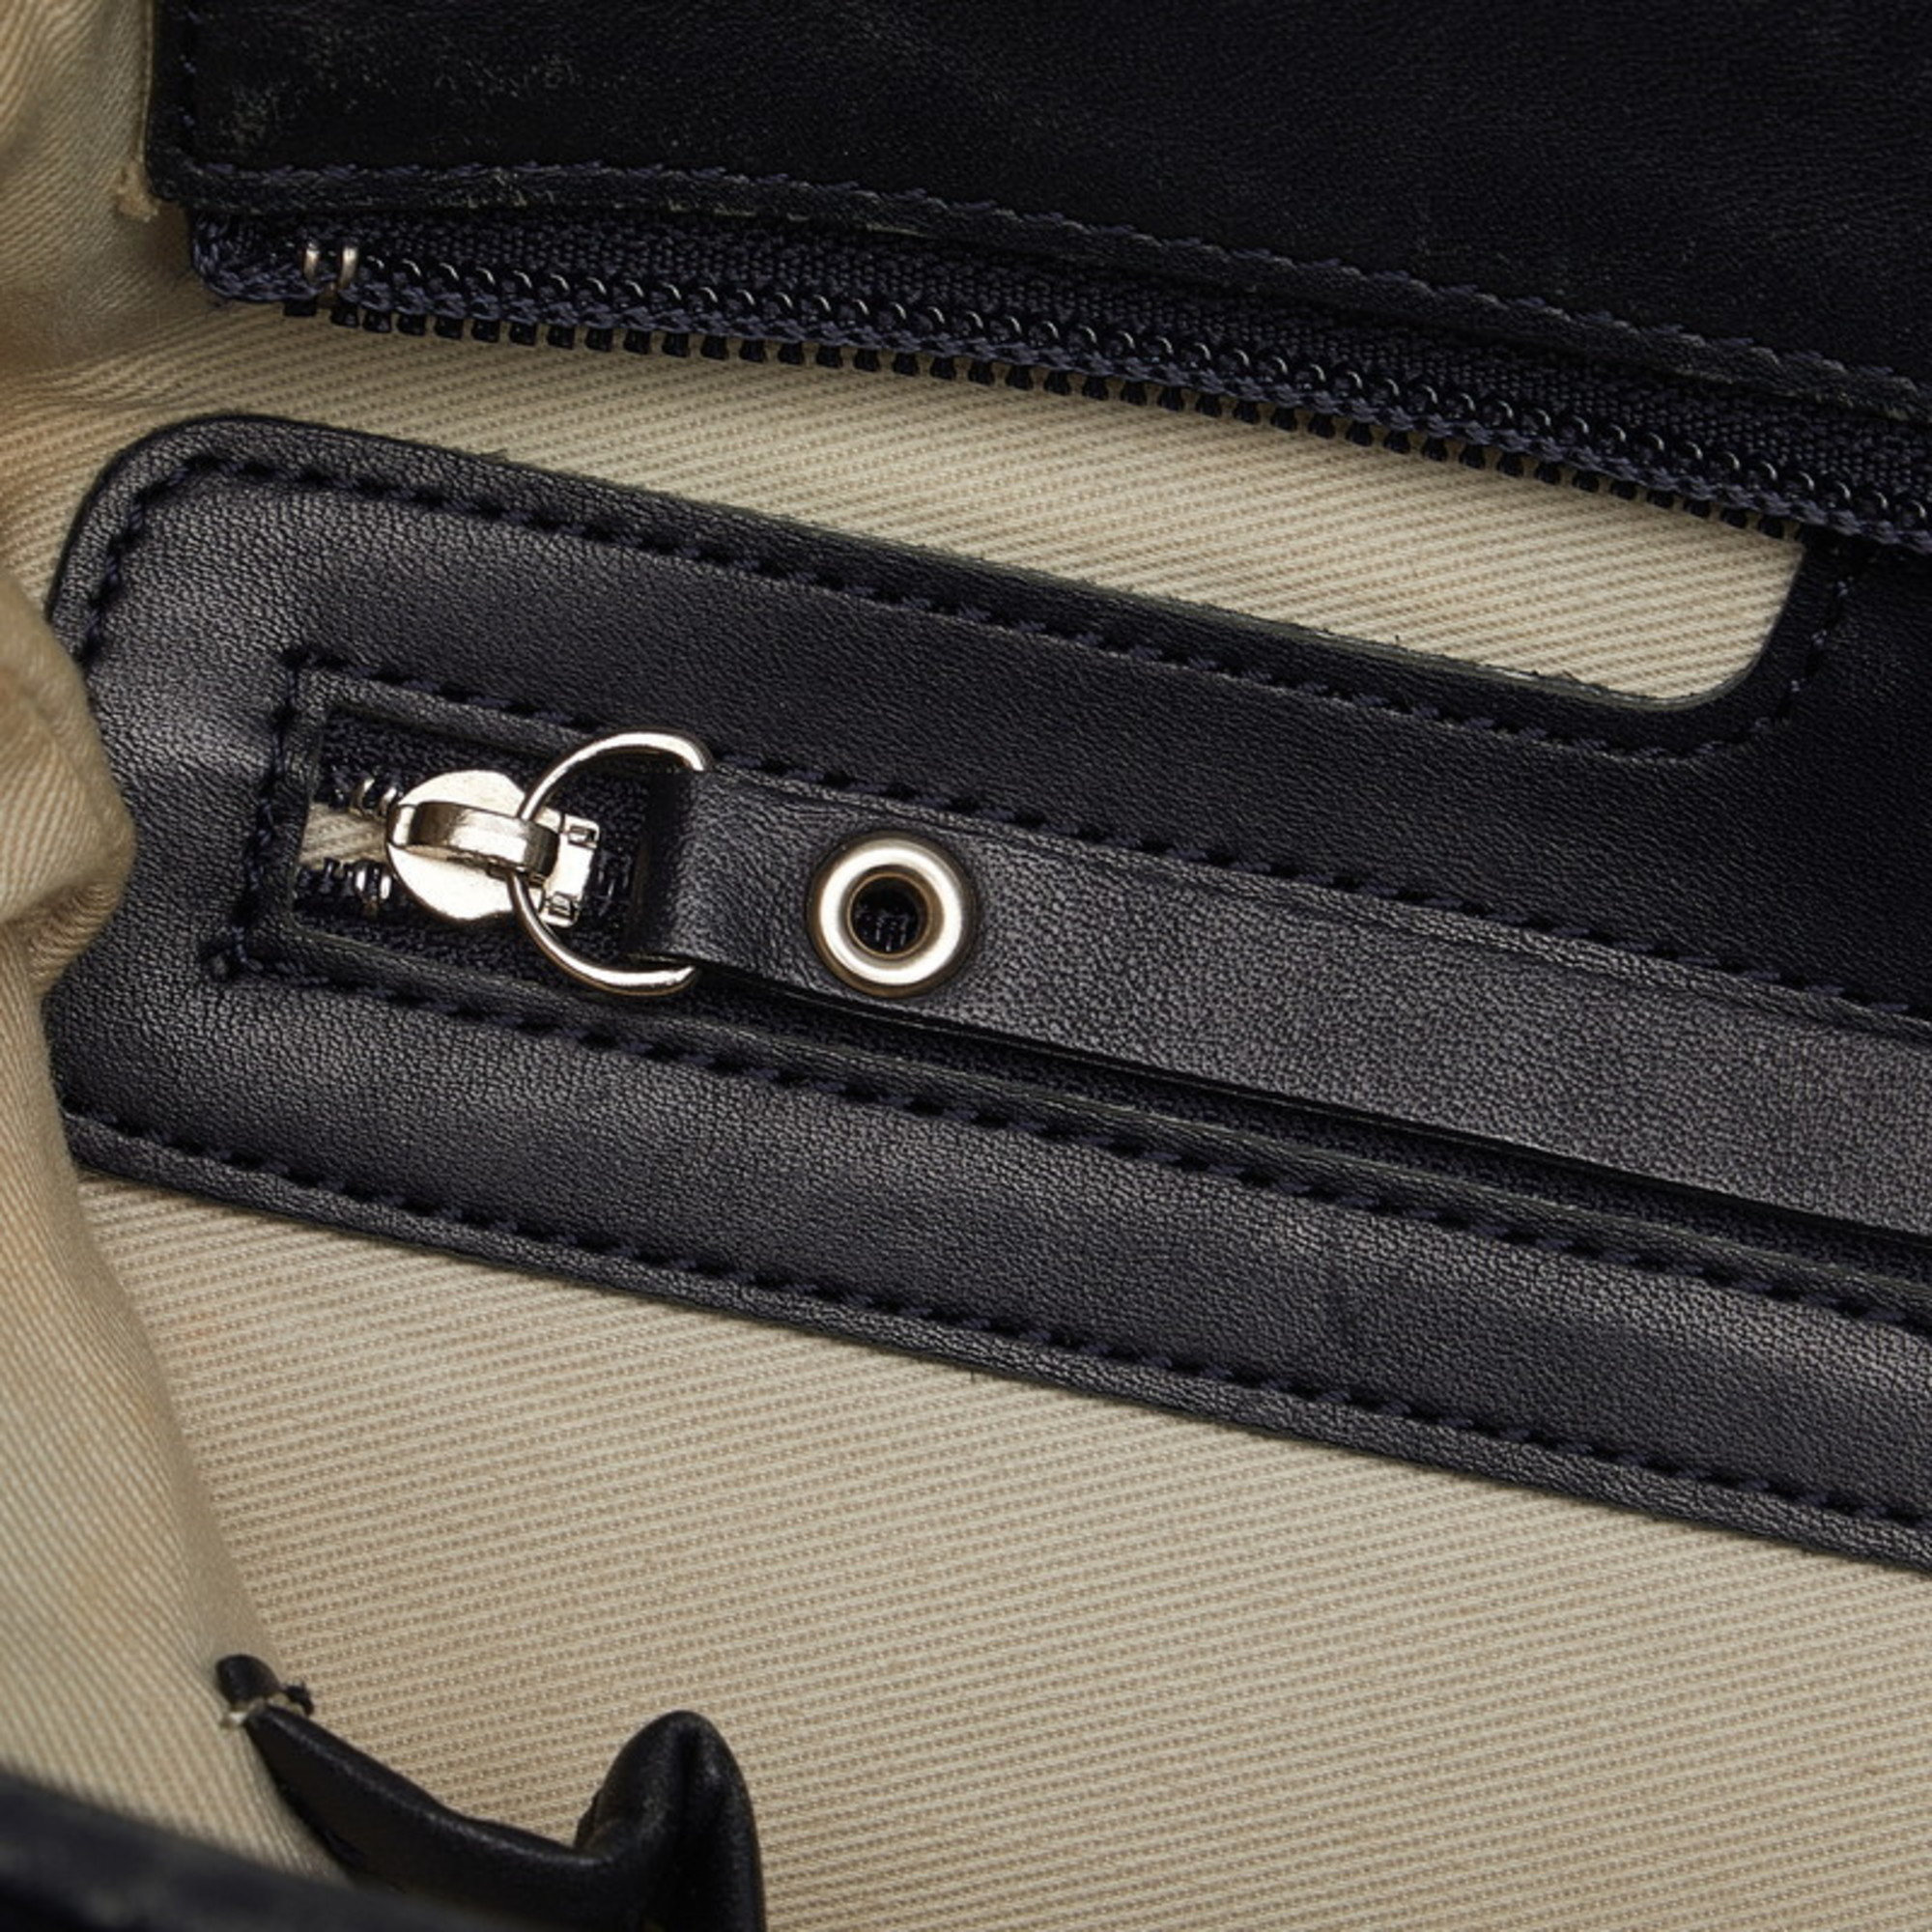 Burberry Check Handbag Tote Bag Beige Black Canvas Leather Women's BURBERRY